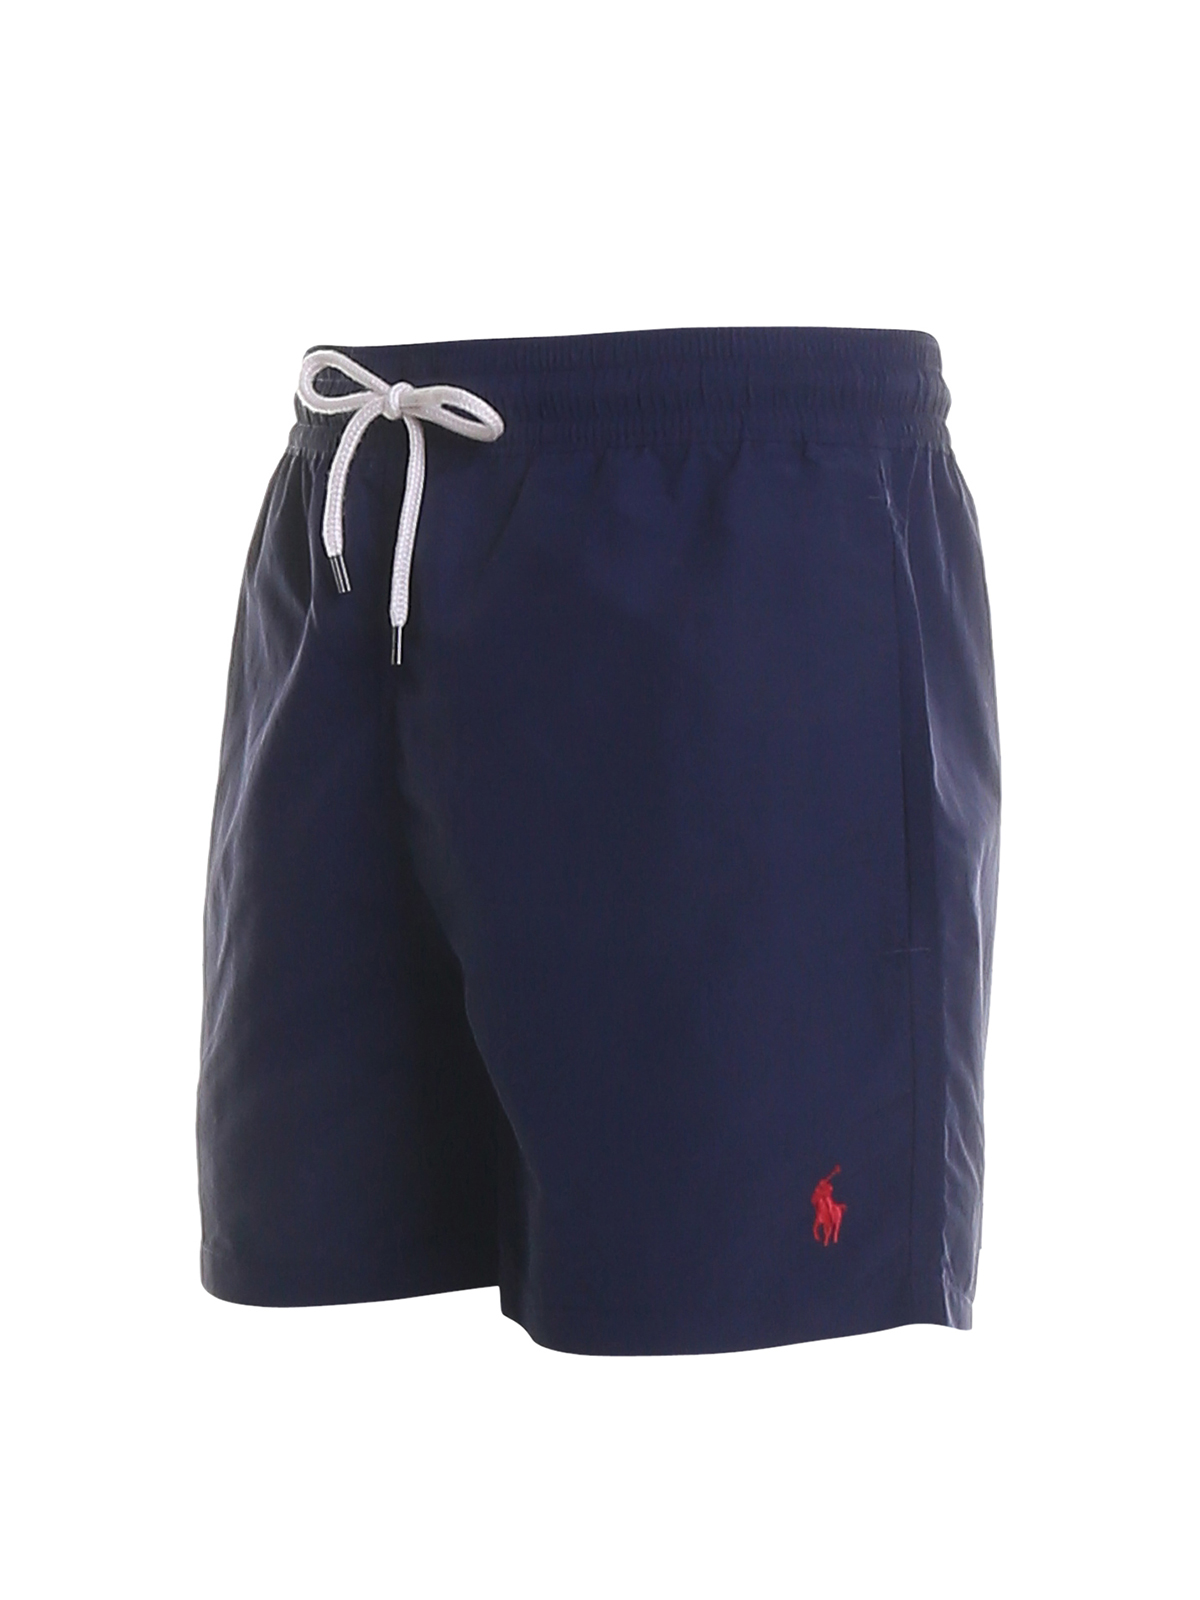 polo ralph lauren swim shorts